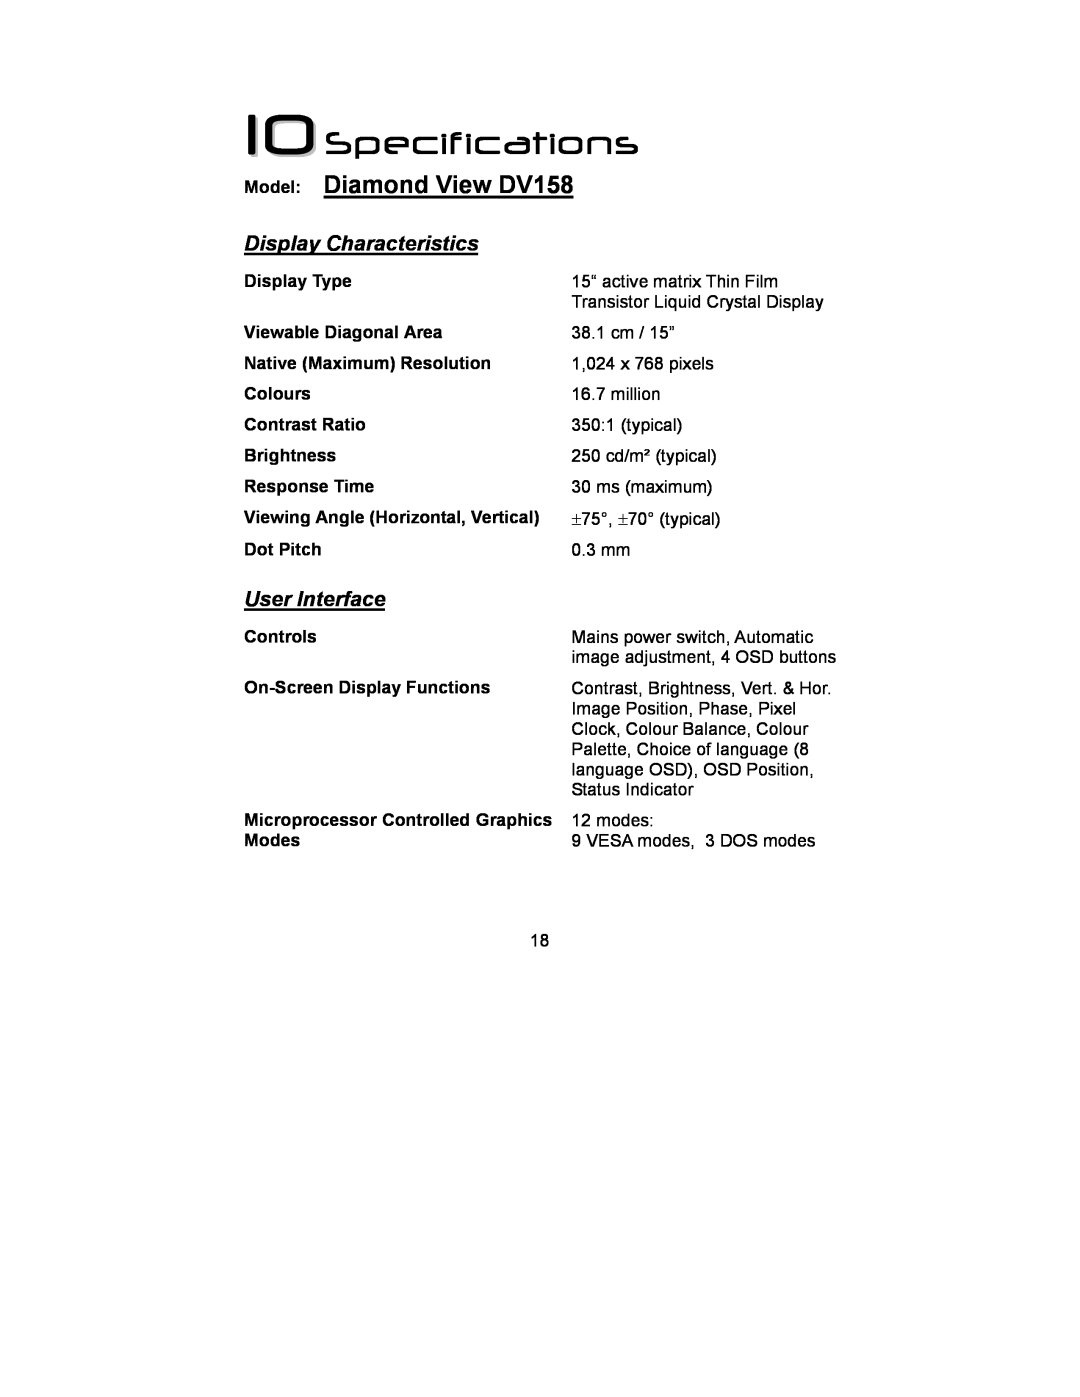 Mitsubishi Electronics manual 10Specifications, Model Diamond View DV158, Display Characteristics, User Interface 